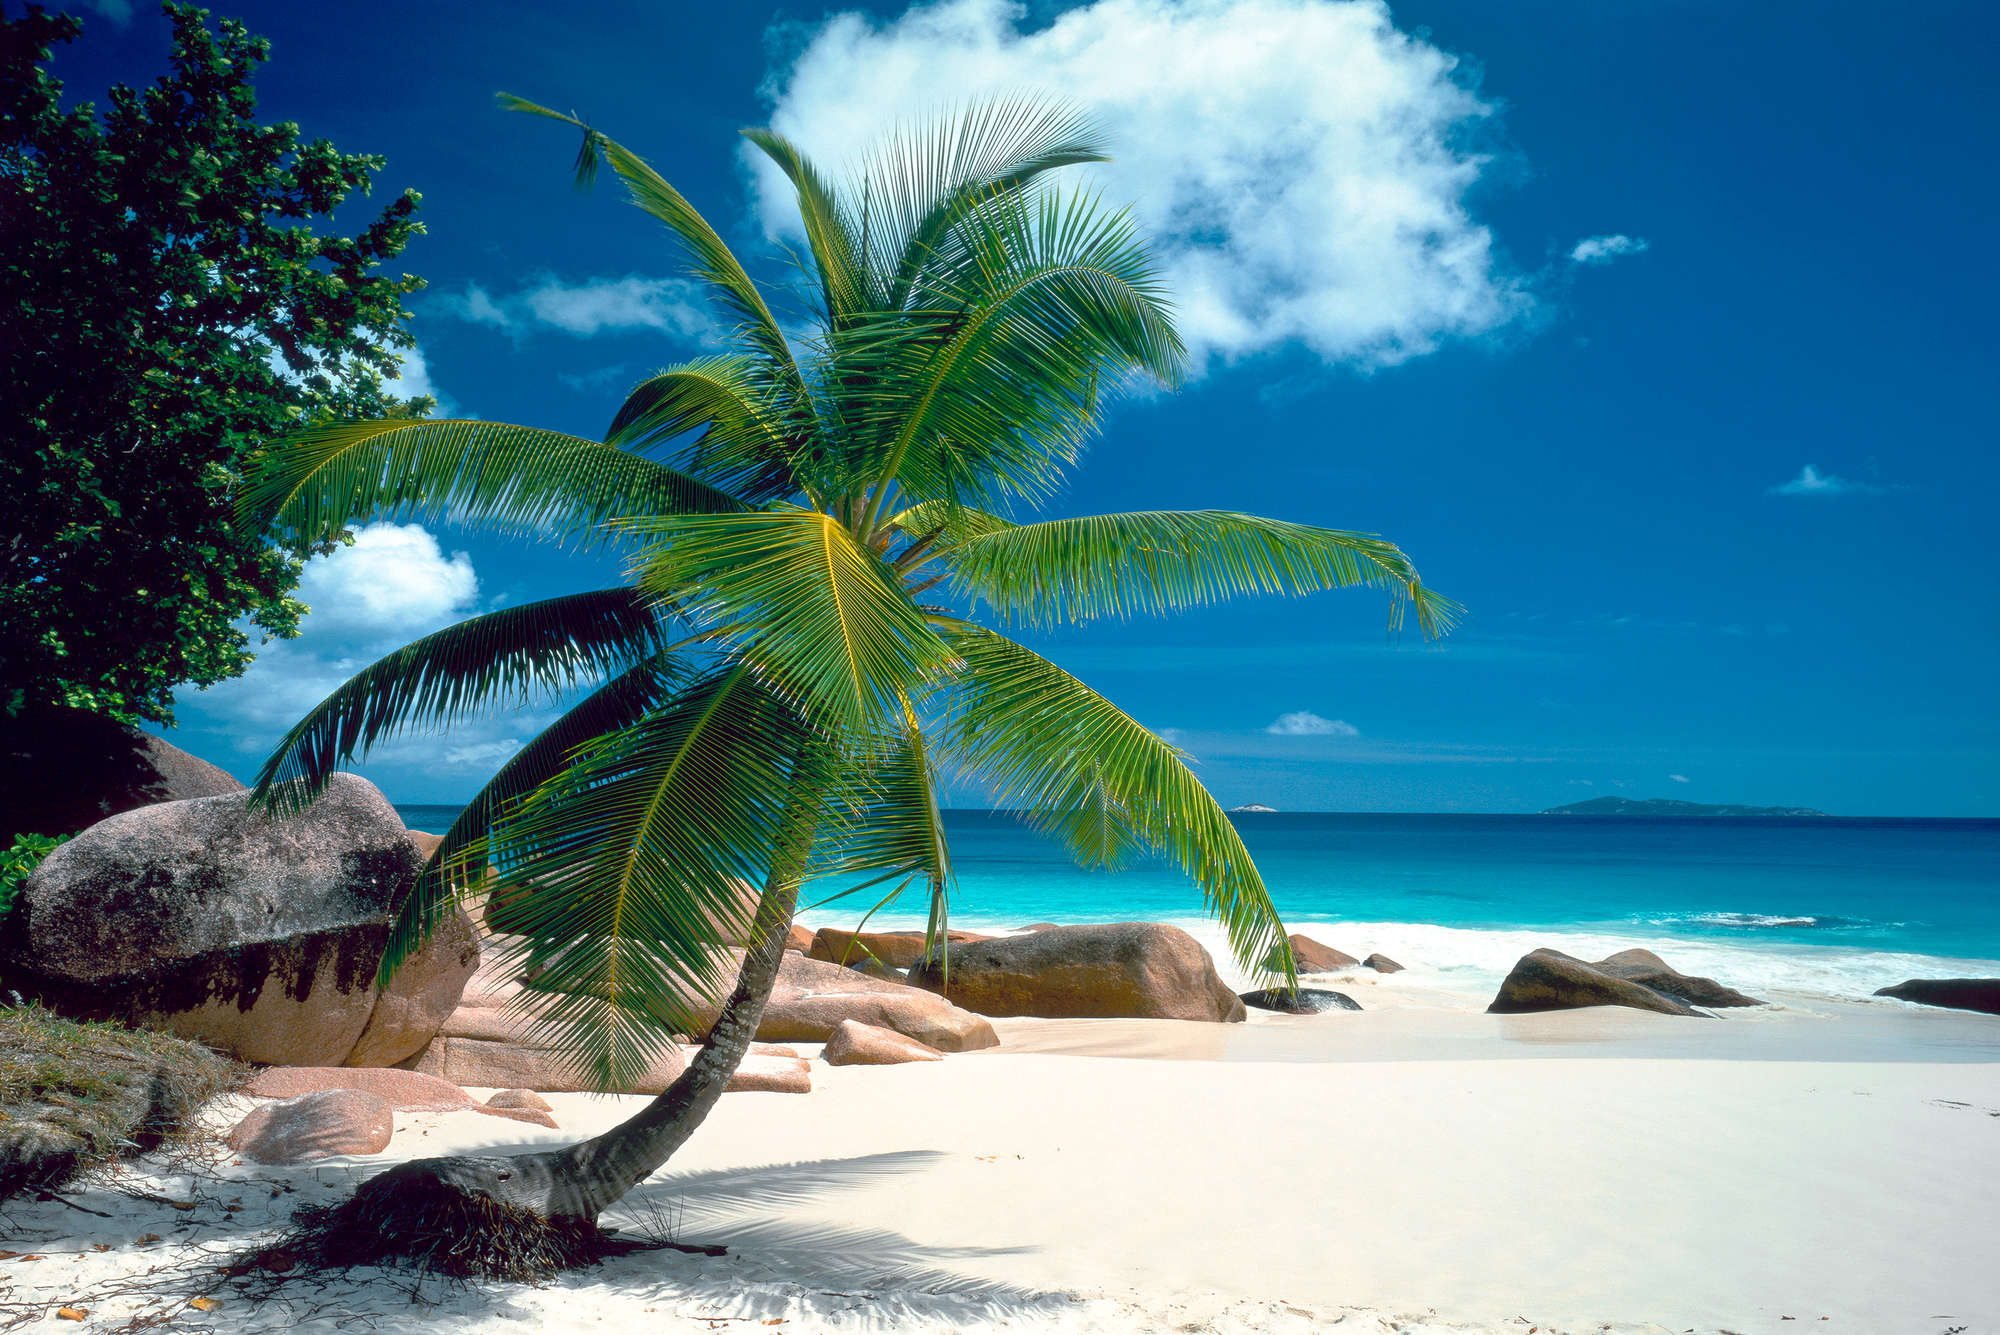             Strand Behang Palmboom met Blauwe Zee op Parelmoer Glad Vlies
        